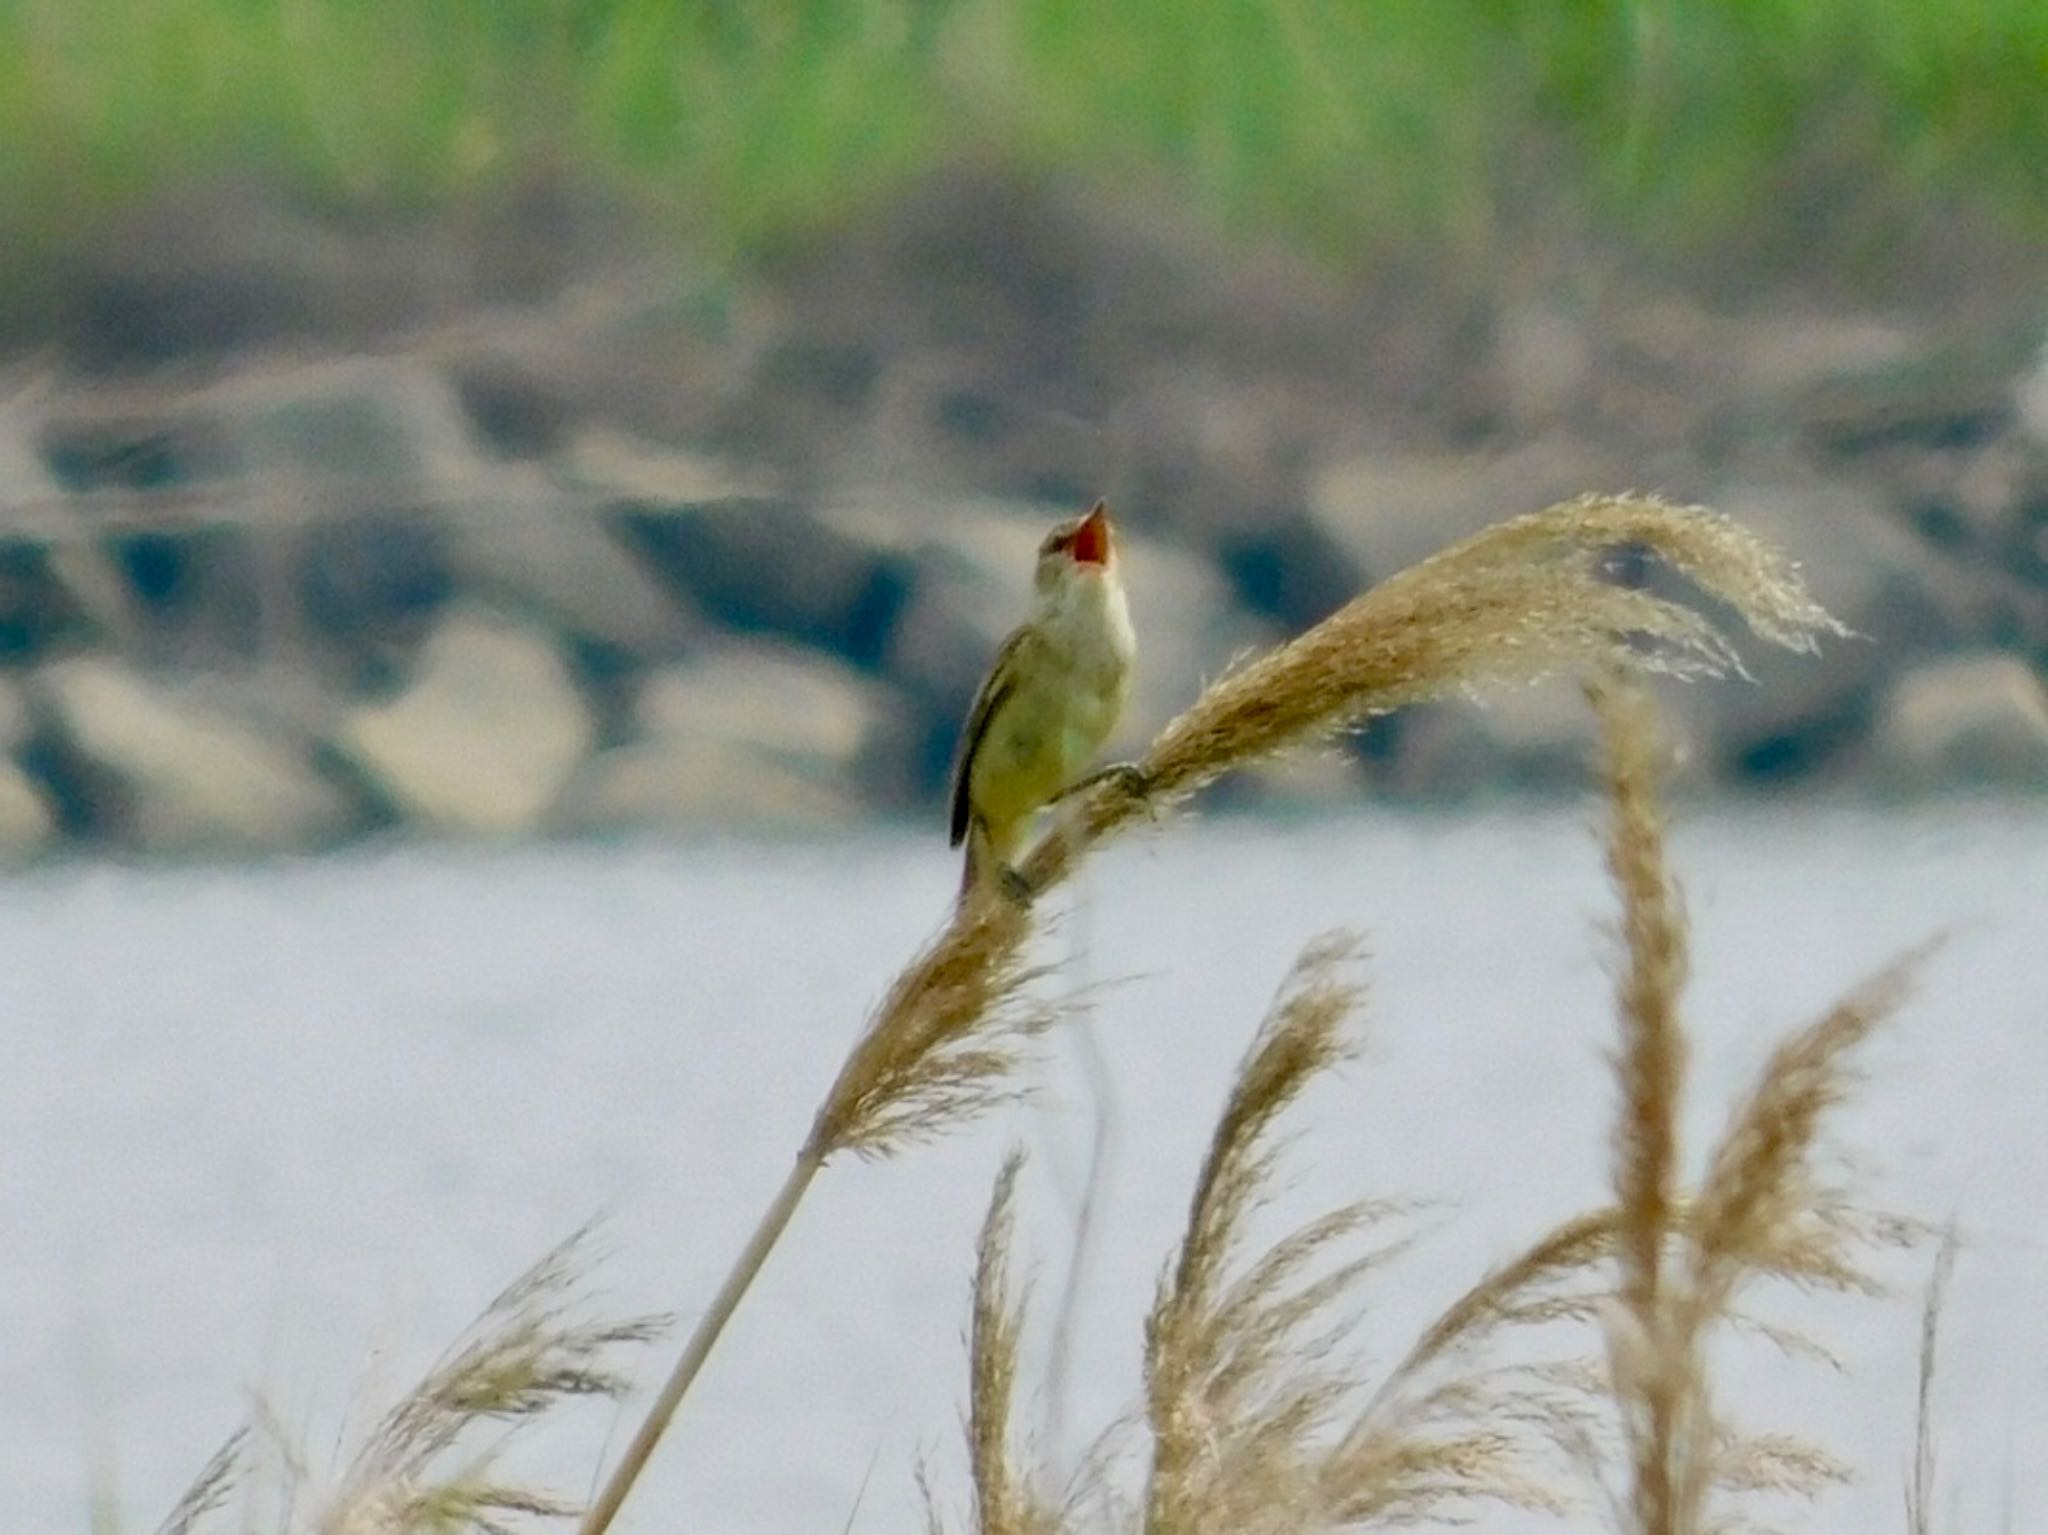 Photo of Oriental Reed Warbler at 鈴鹿川派川河口 by カモちゃん